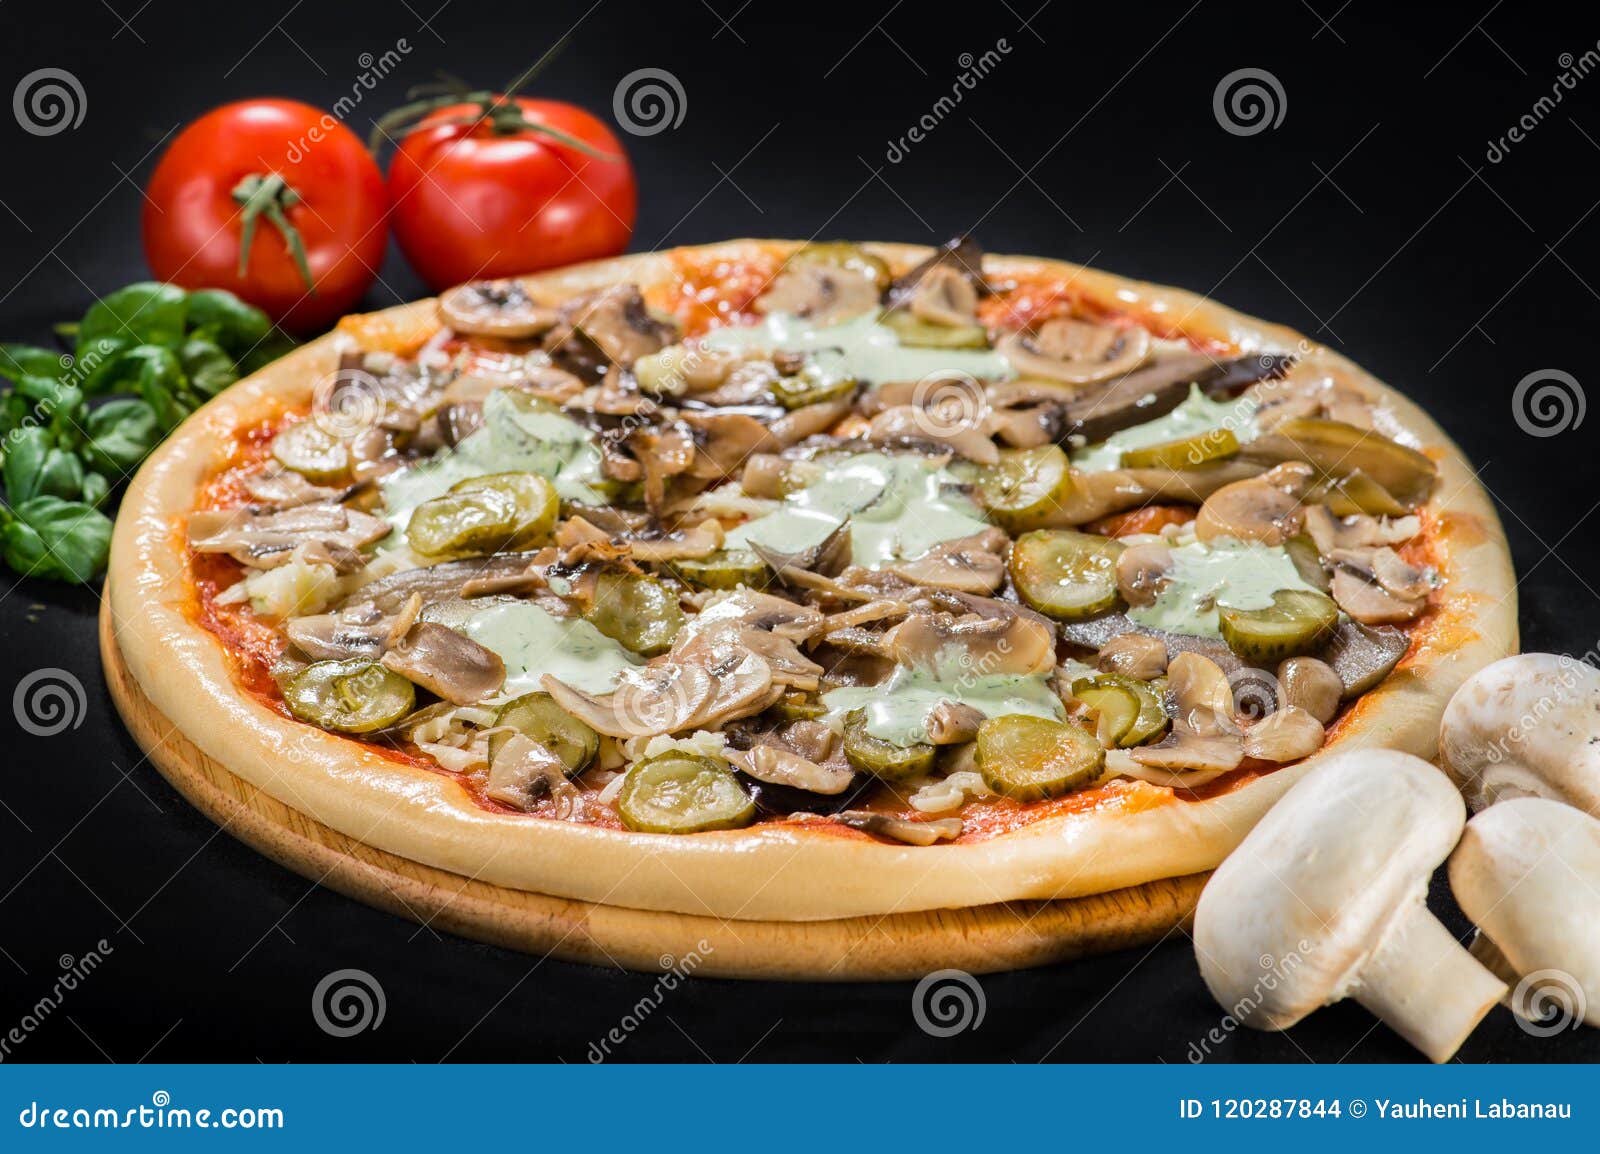 пицца грибная с шампиньонами и помидорами фото 85